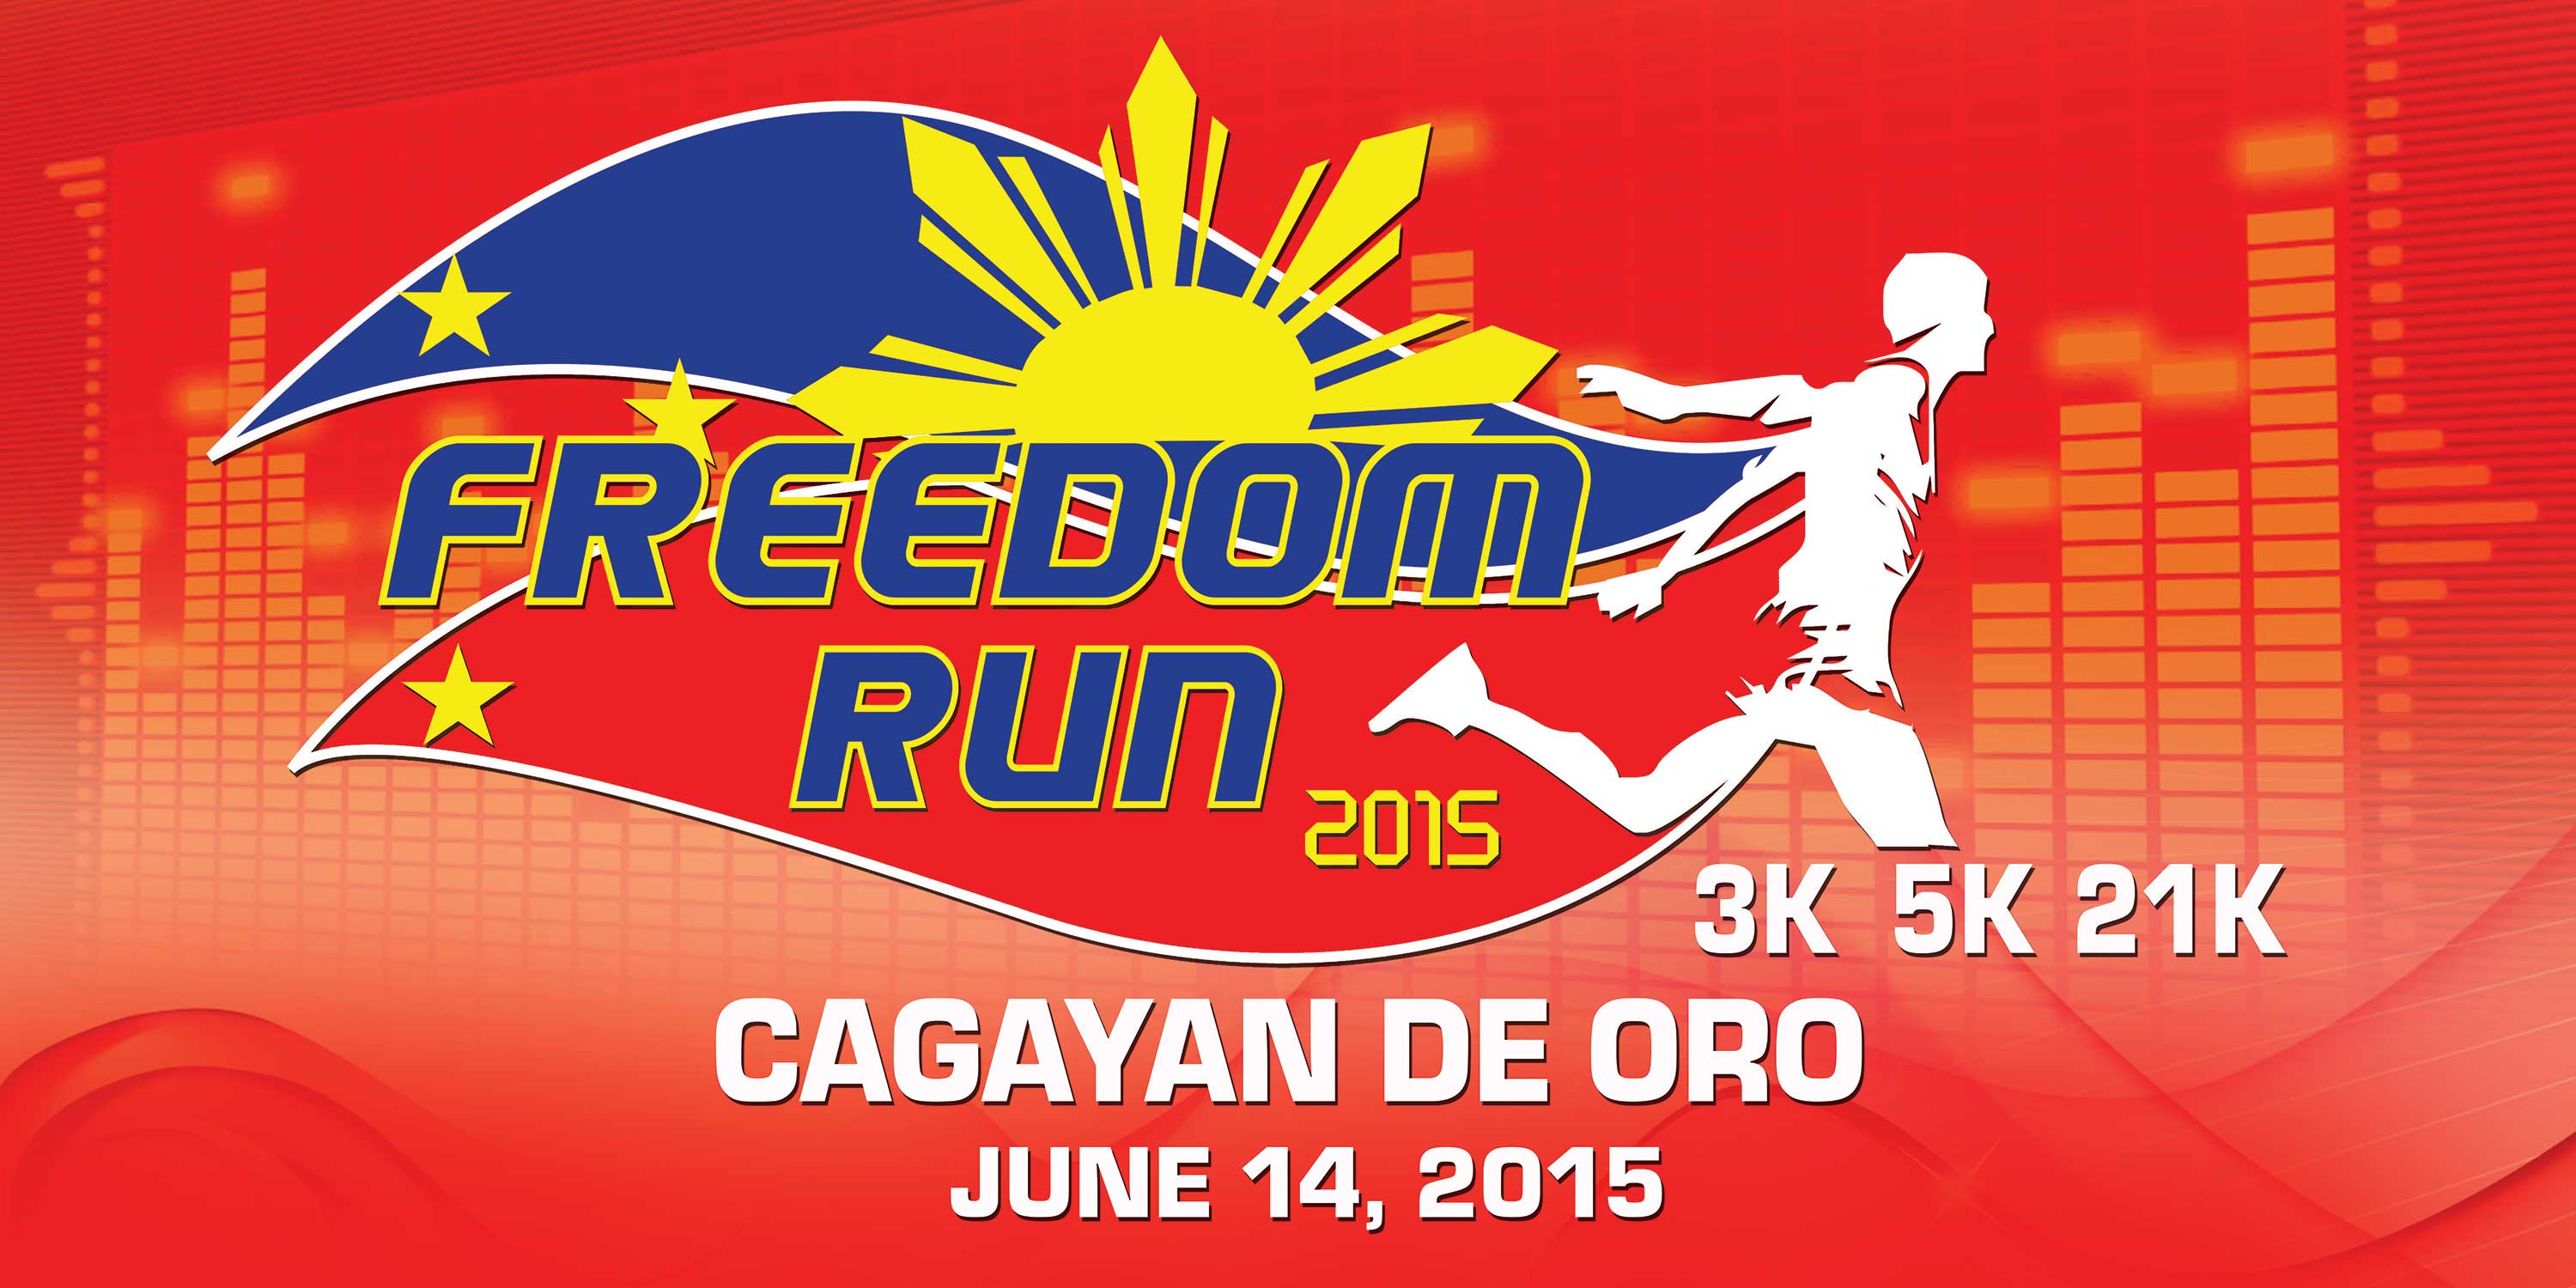 Freedom Run 2015 in Cagayan de Oro set on June 14